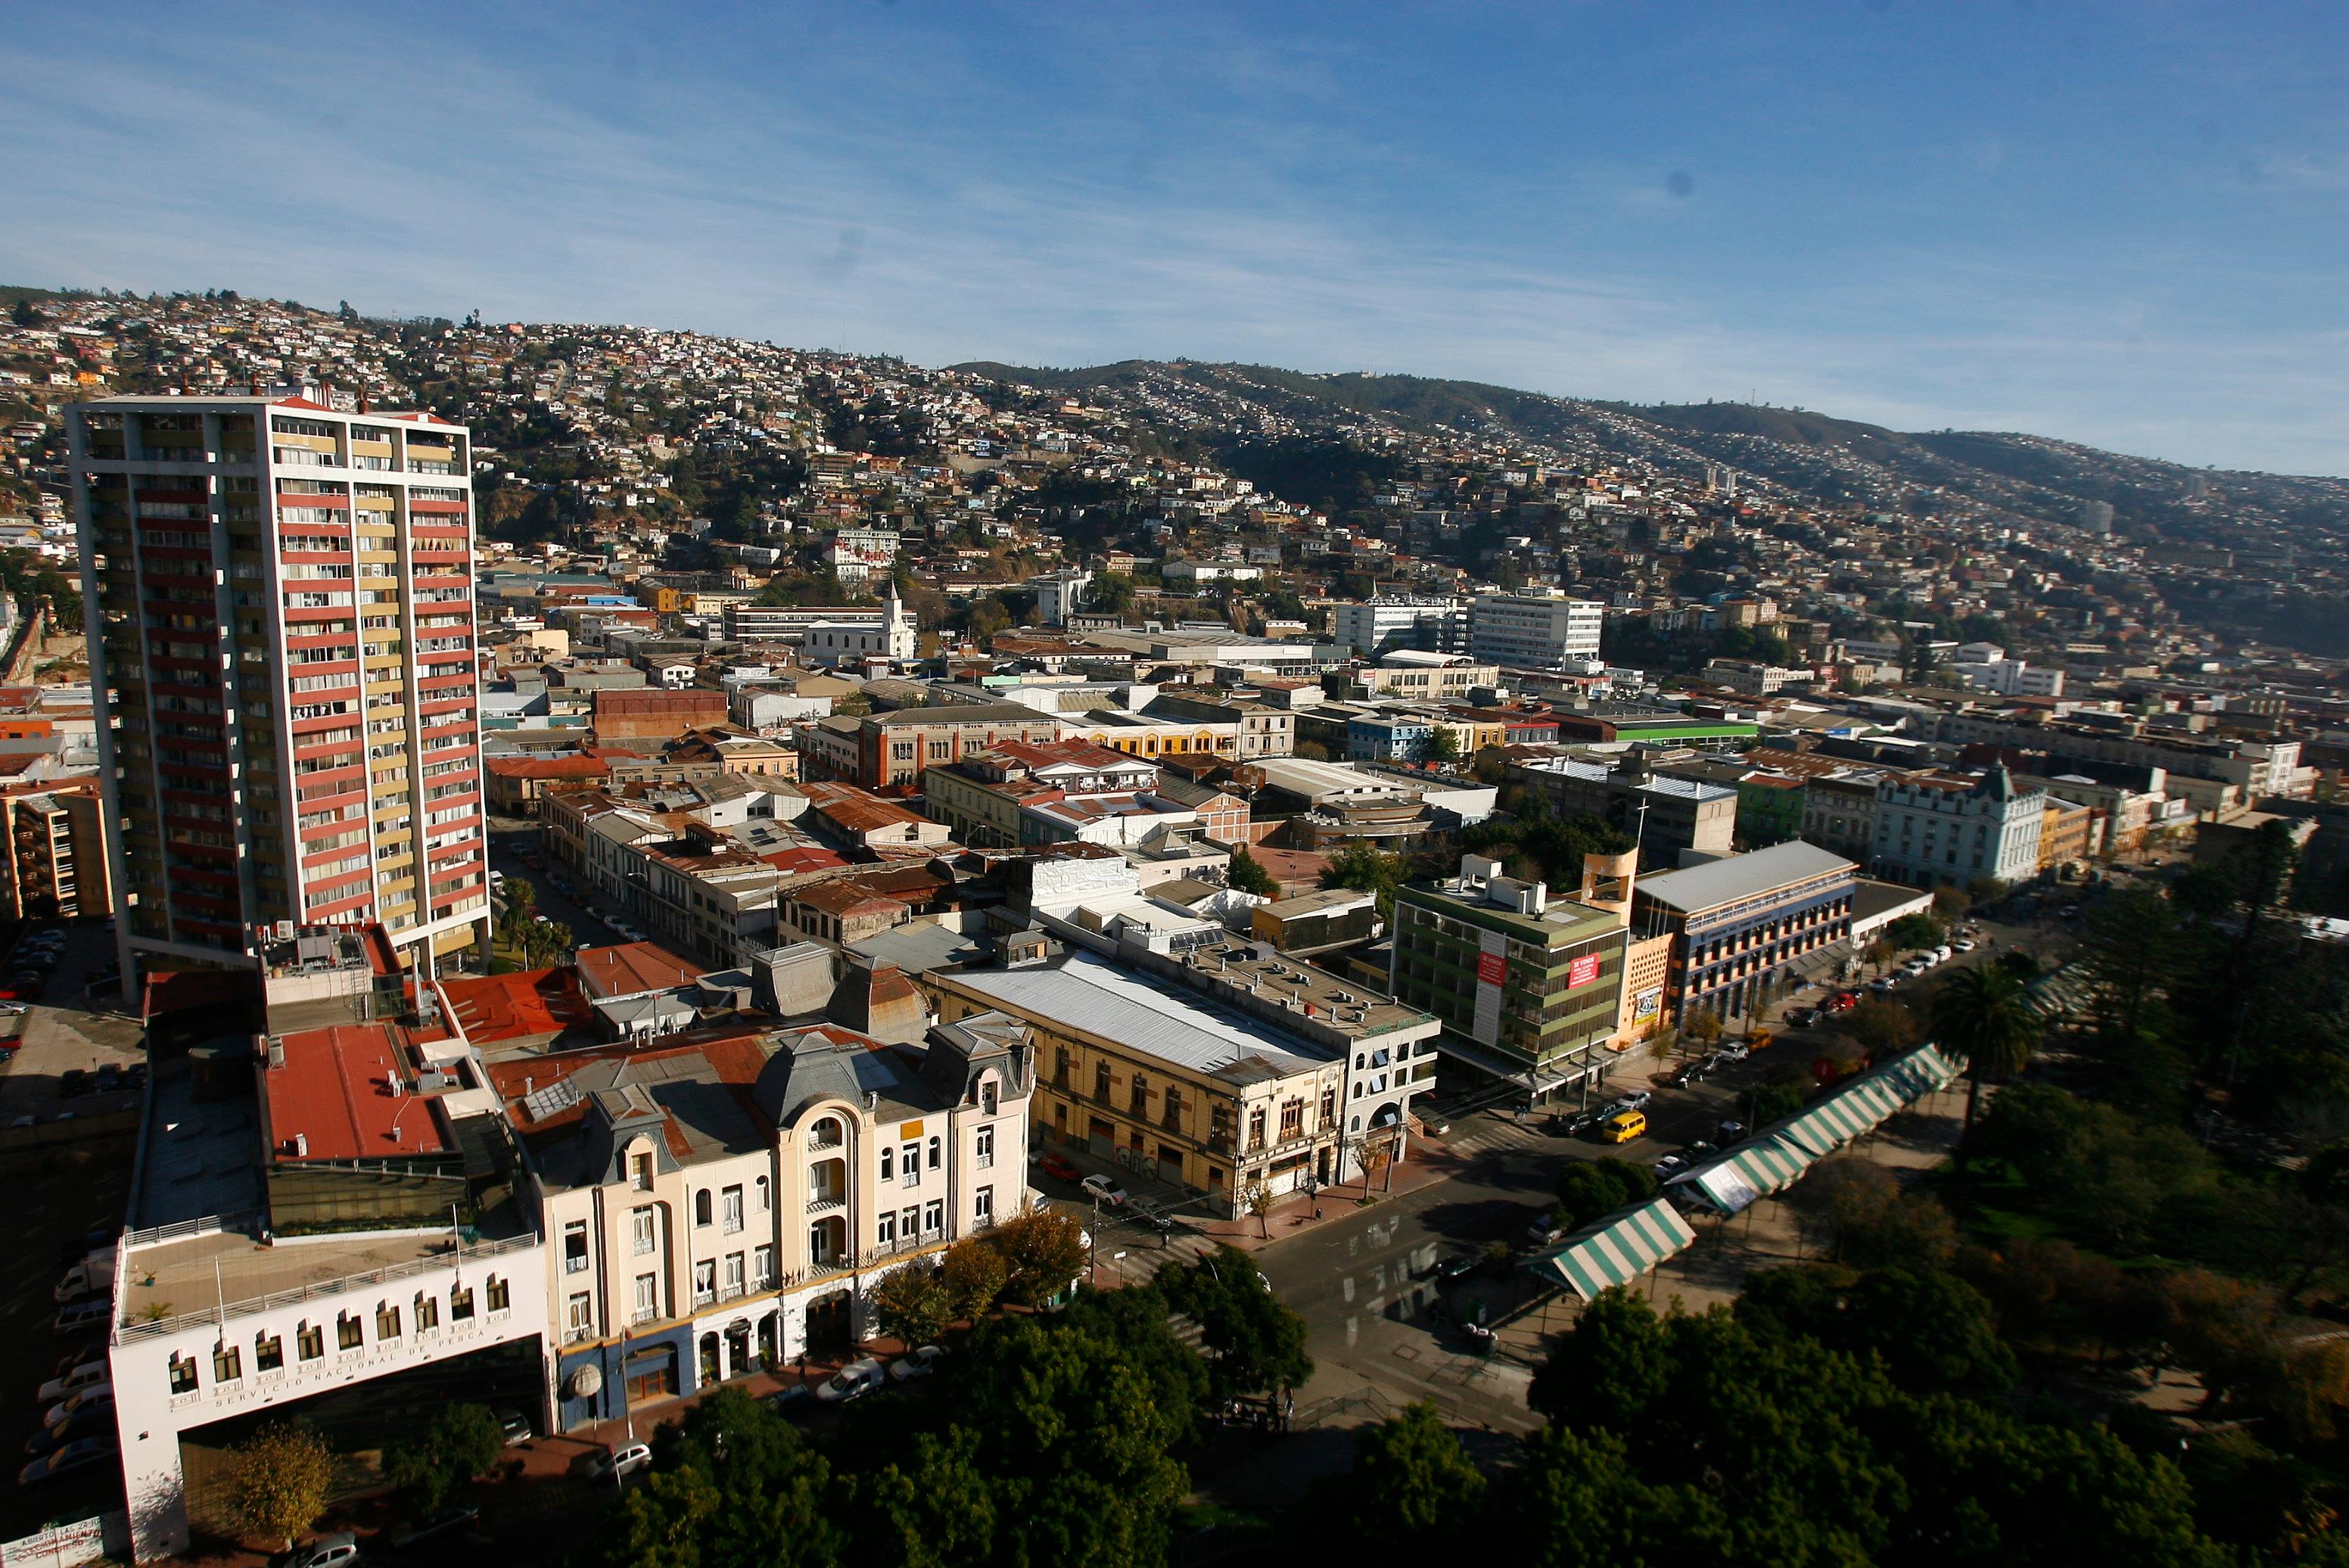 Minvu invertirá en histórico barrio de Valparaíso: preocupación entre vecinos por tipo de proyecto inmobiliario